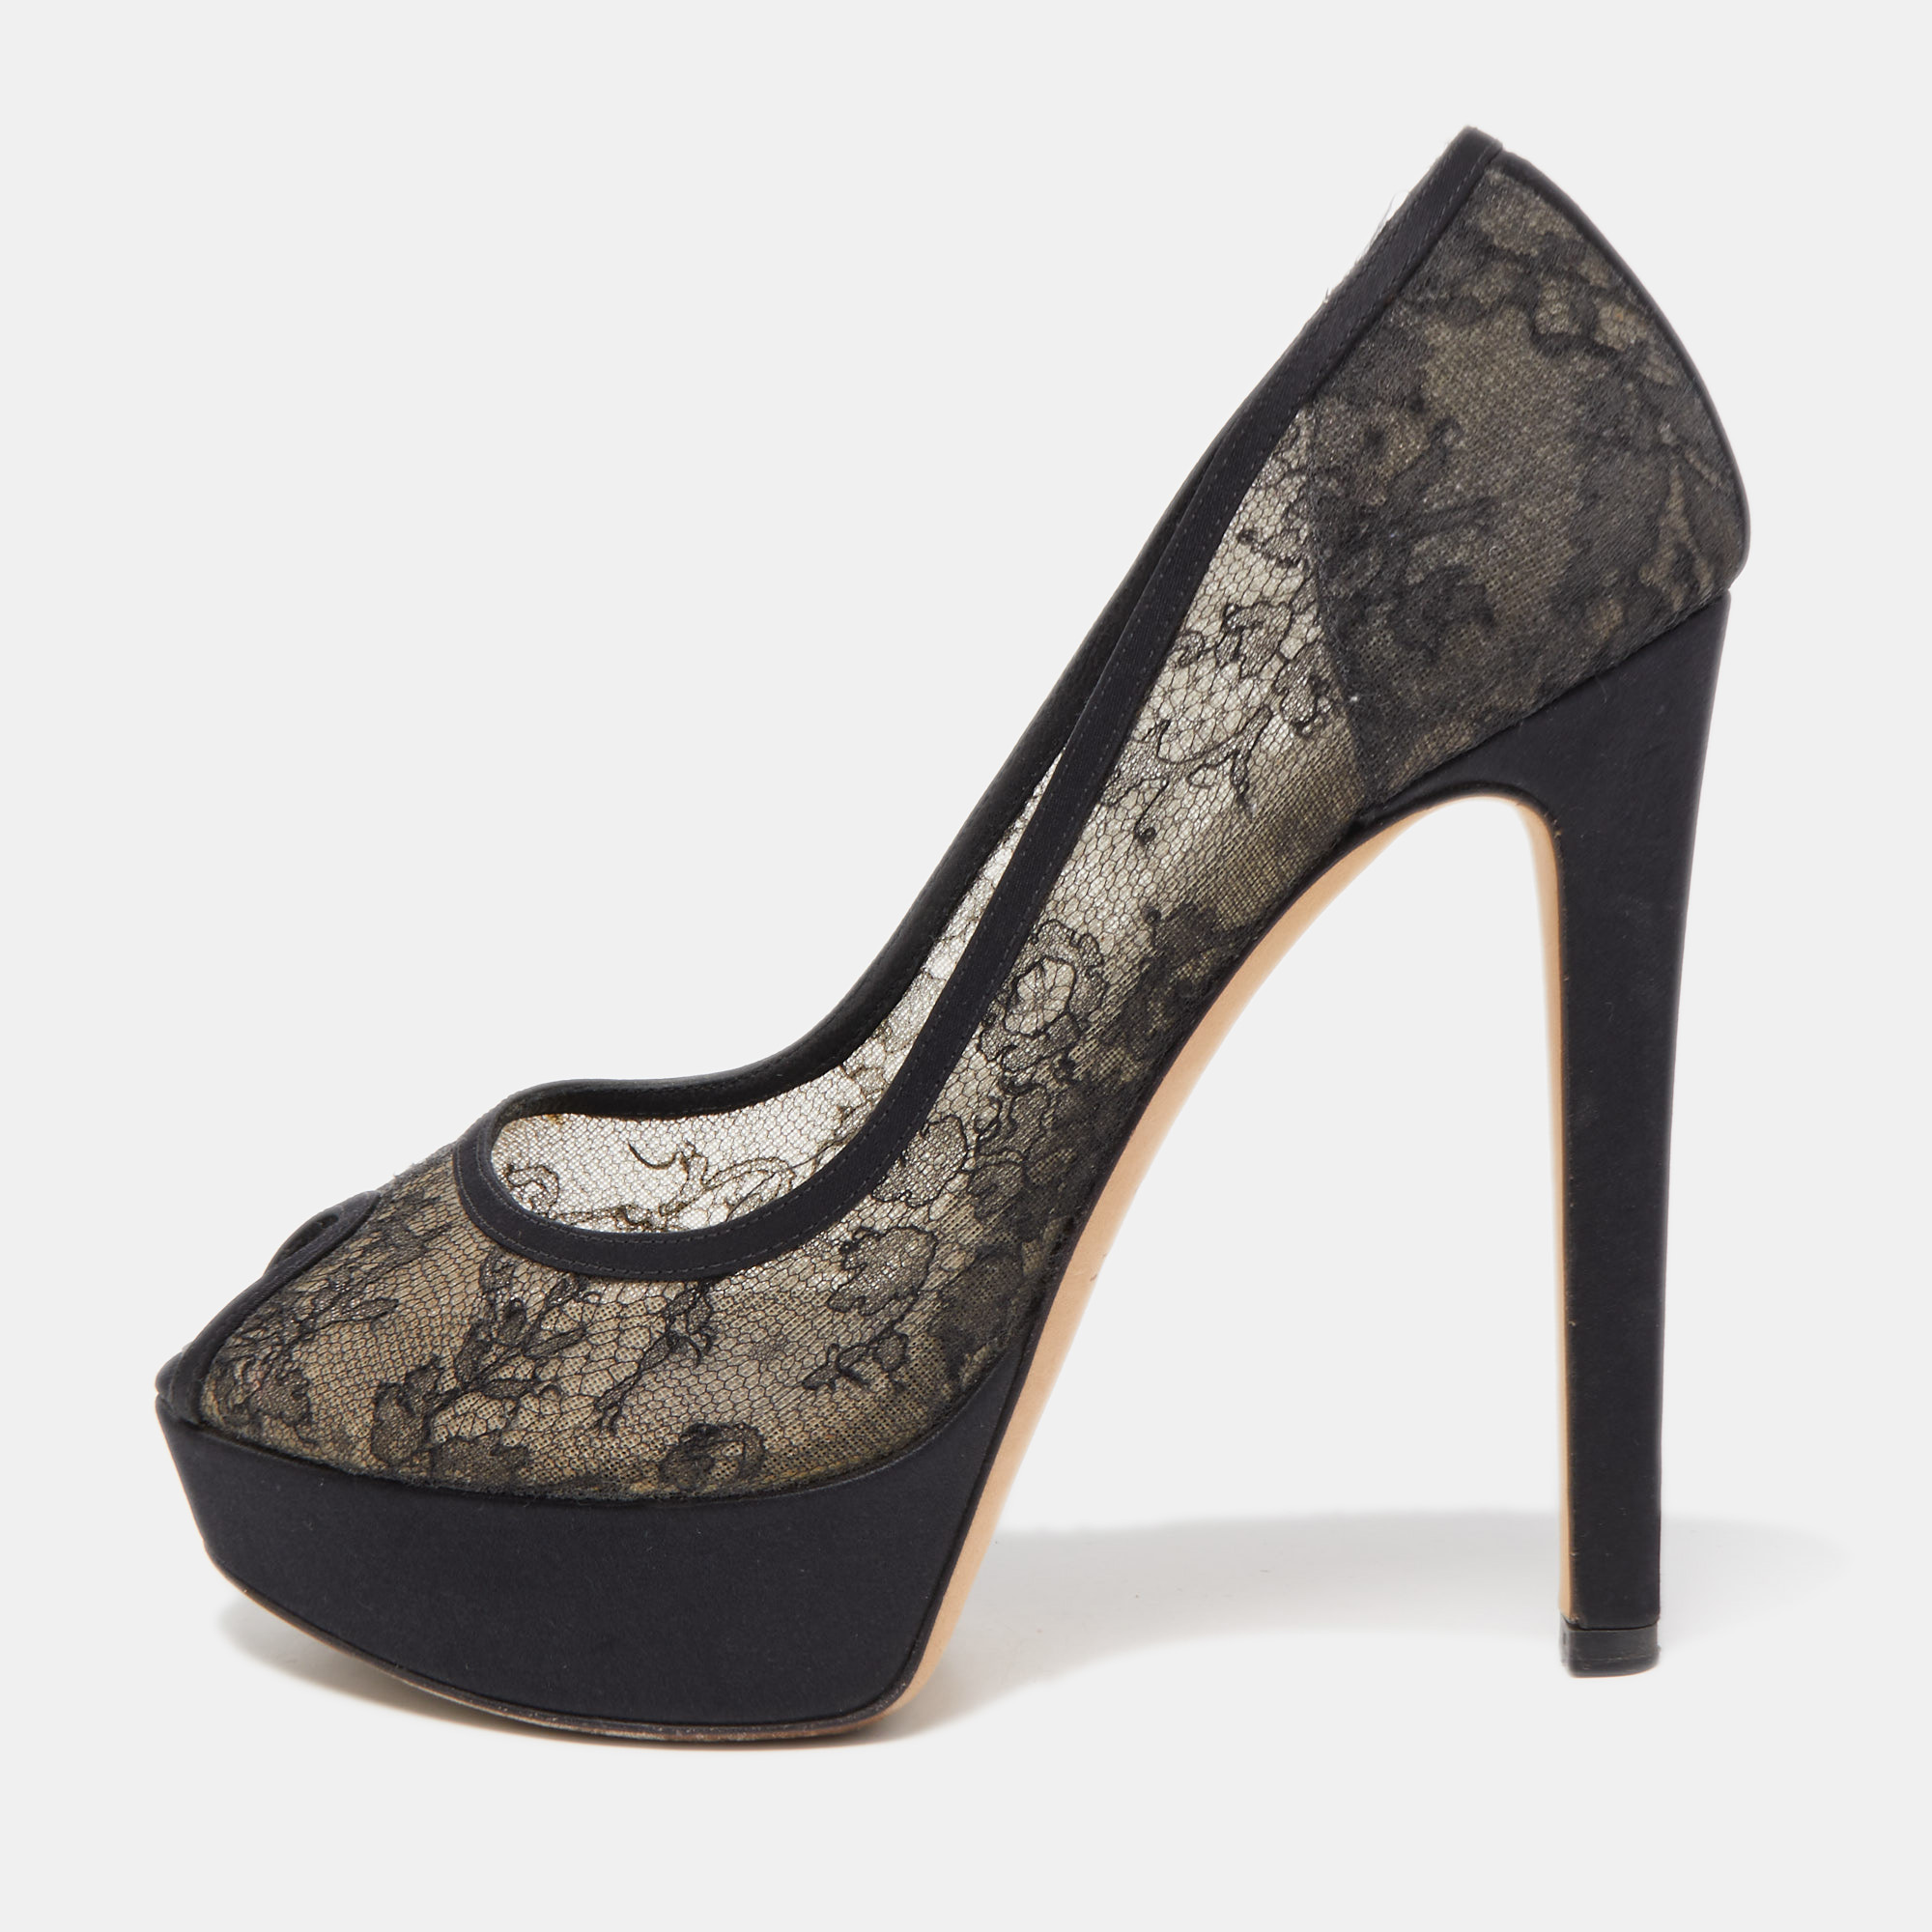 Dior black lace and satin peep toe platform pumps size 37